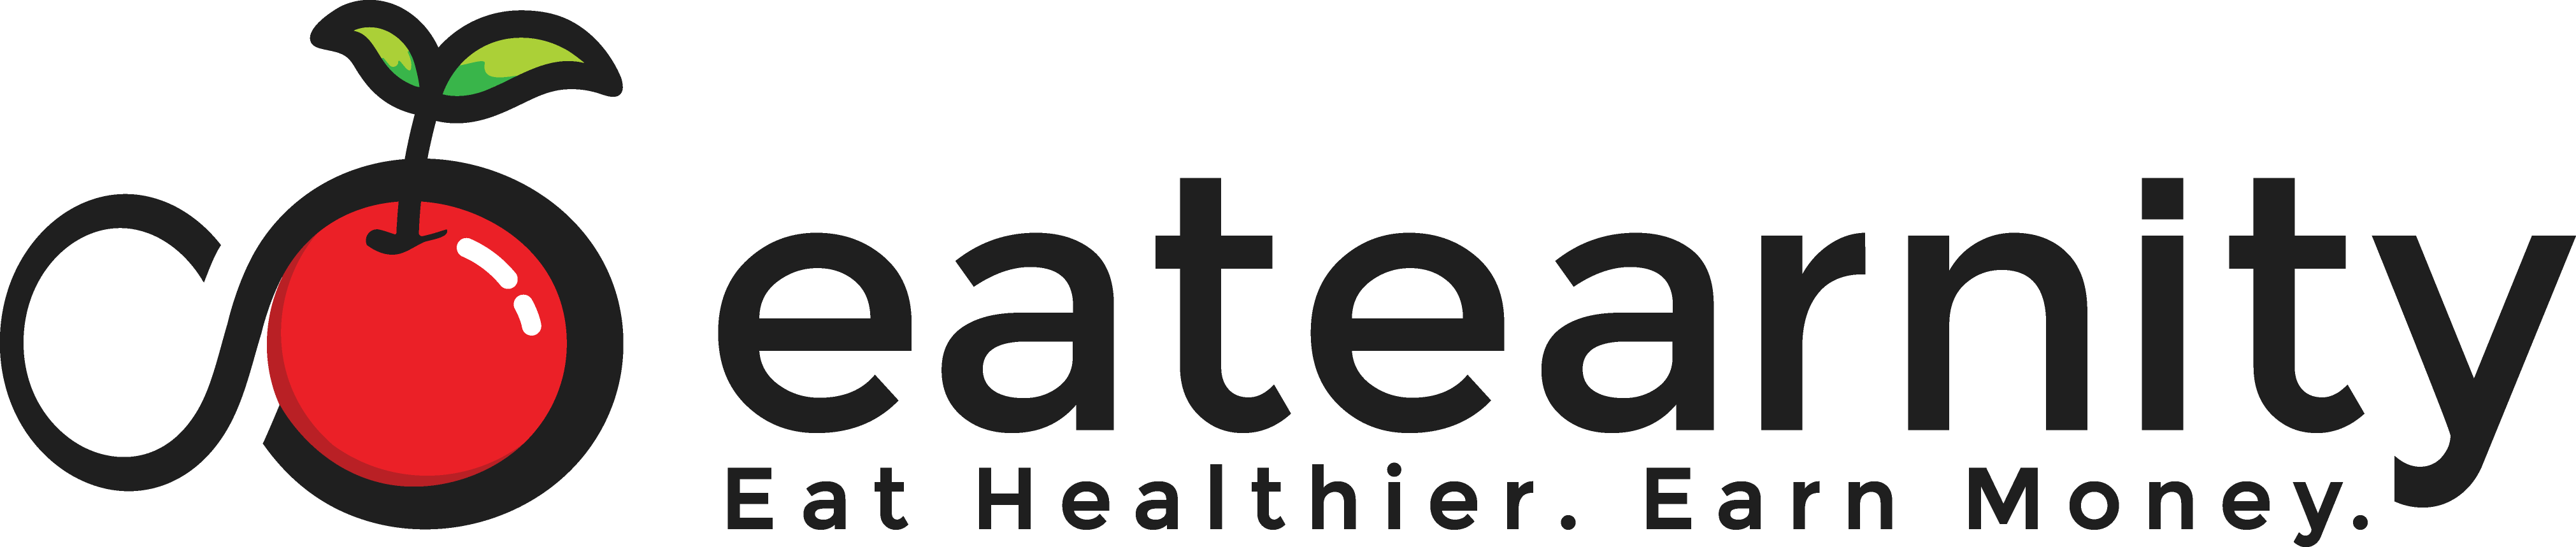 Eatearnity Logo Left-01.png